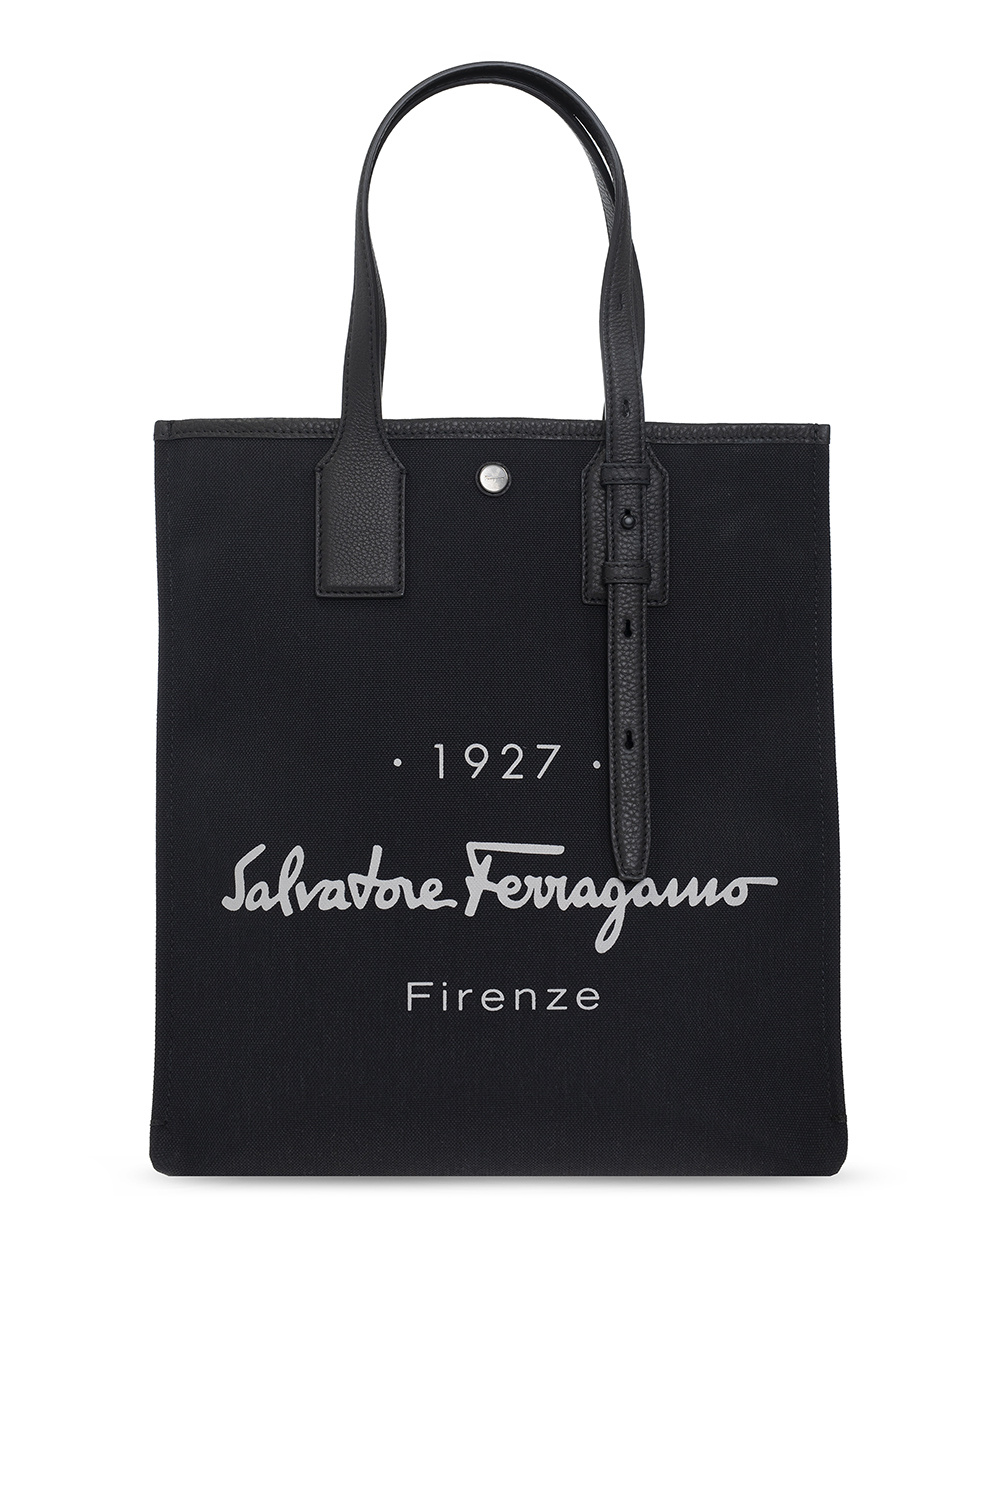 Salvatore Ferragamo Shopper bag